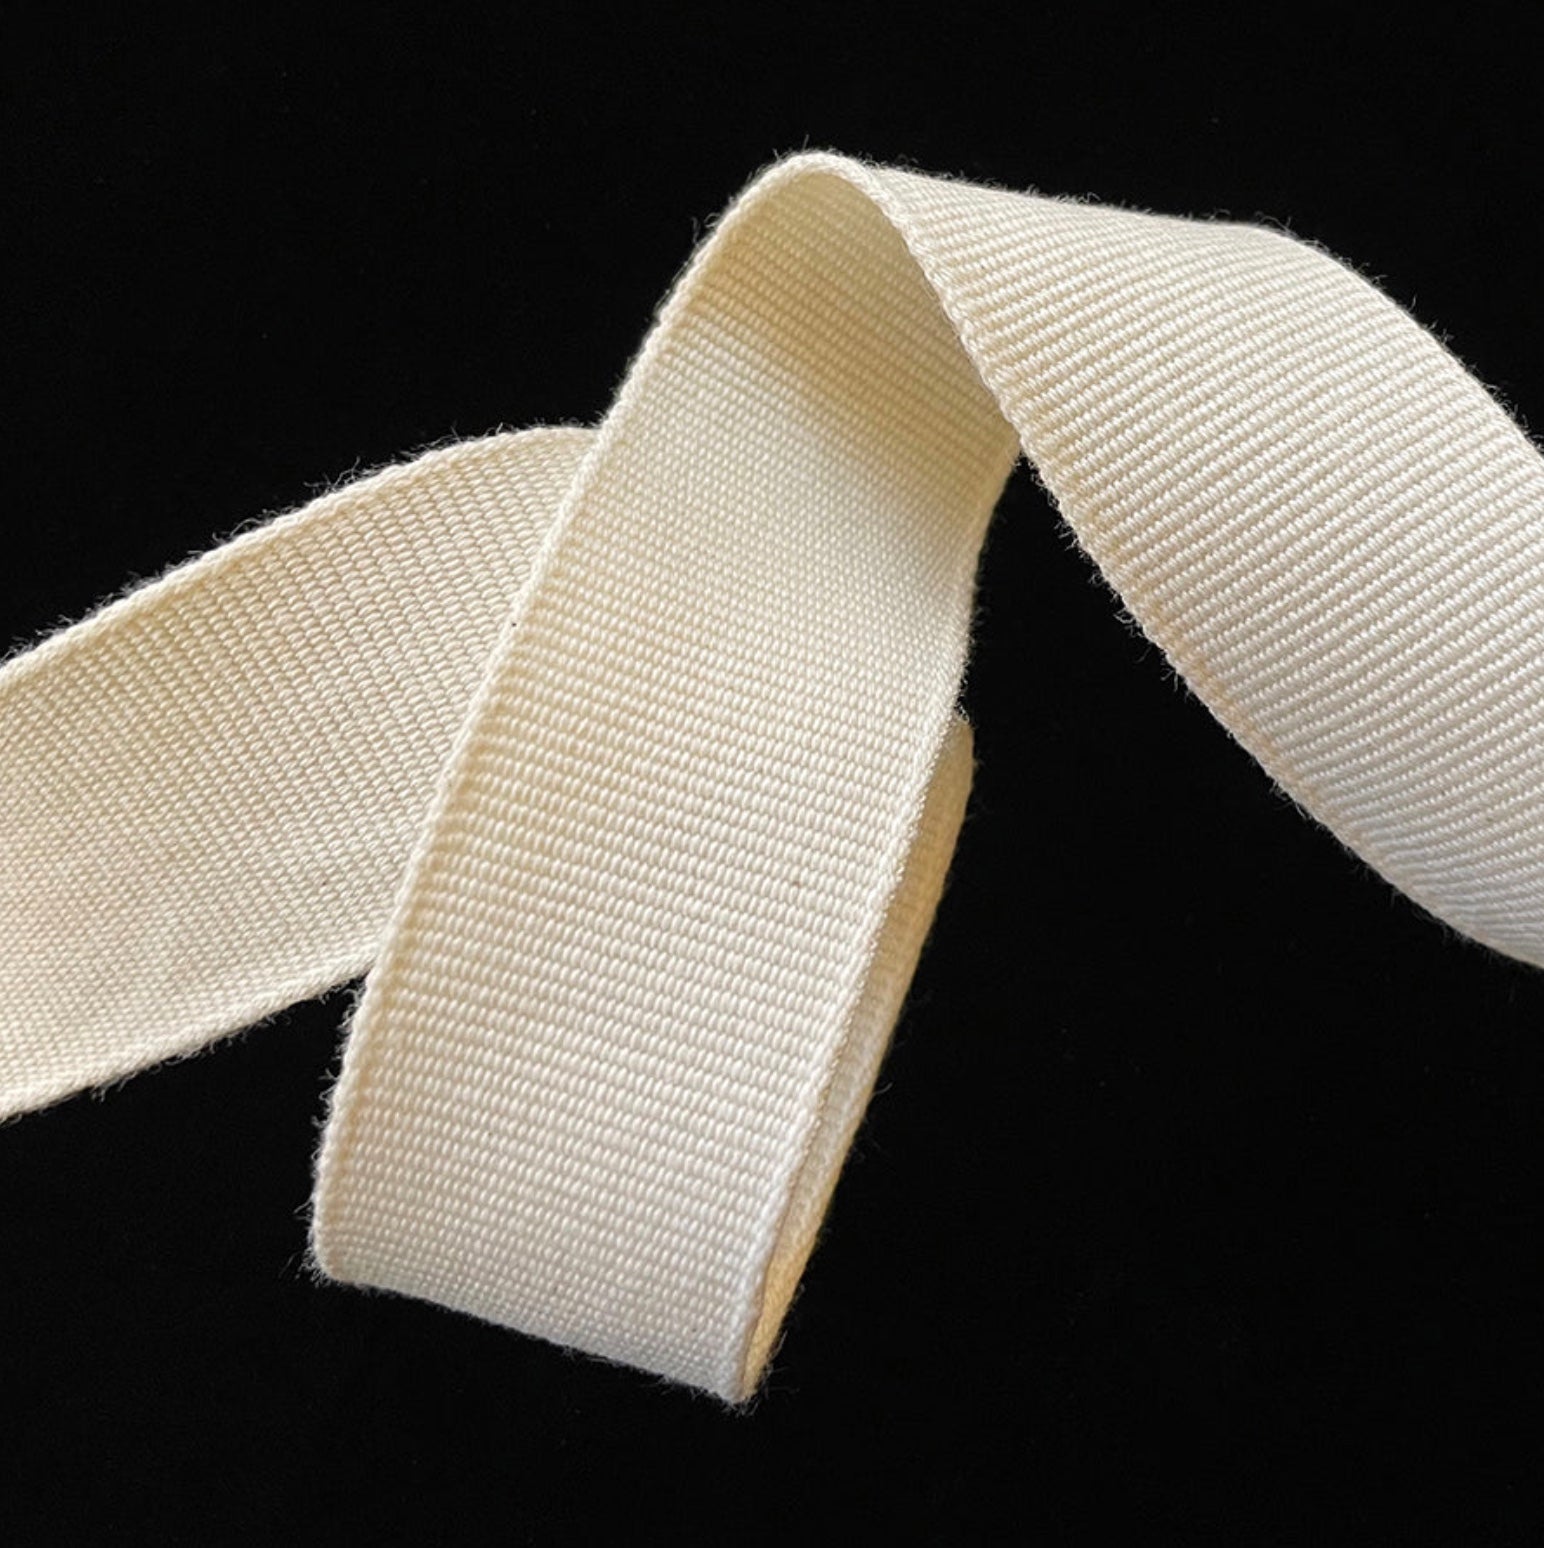 Grosgrain Ribbon White 1 | Harts Fabric